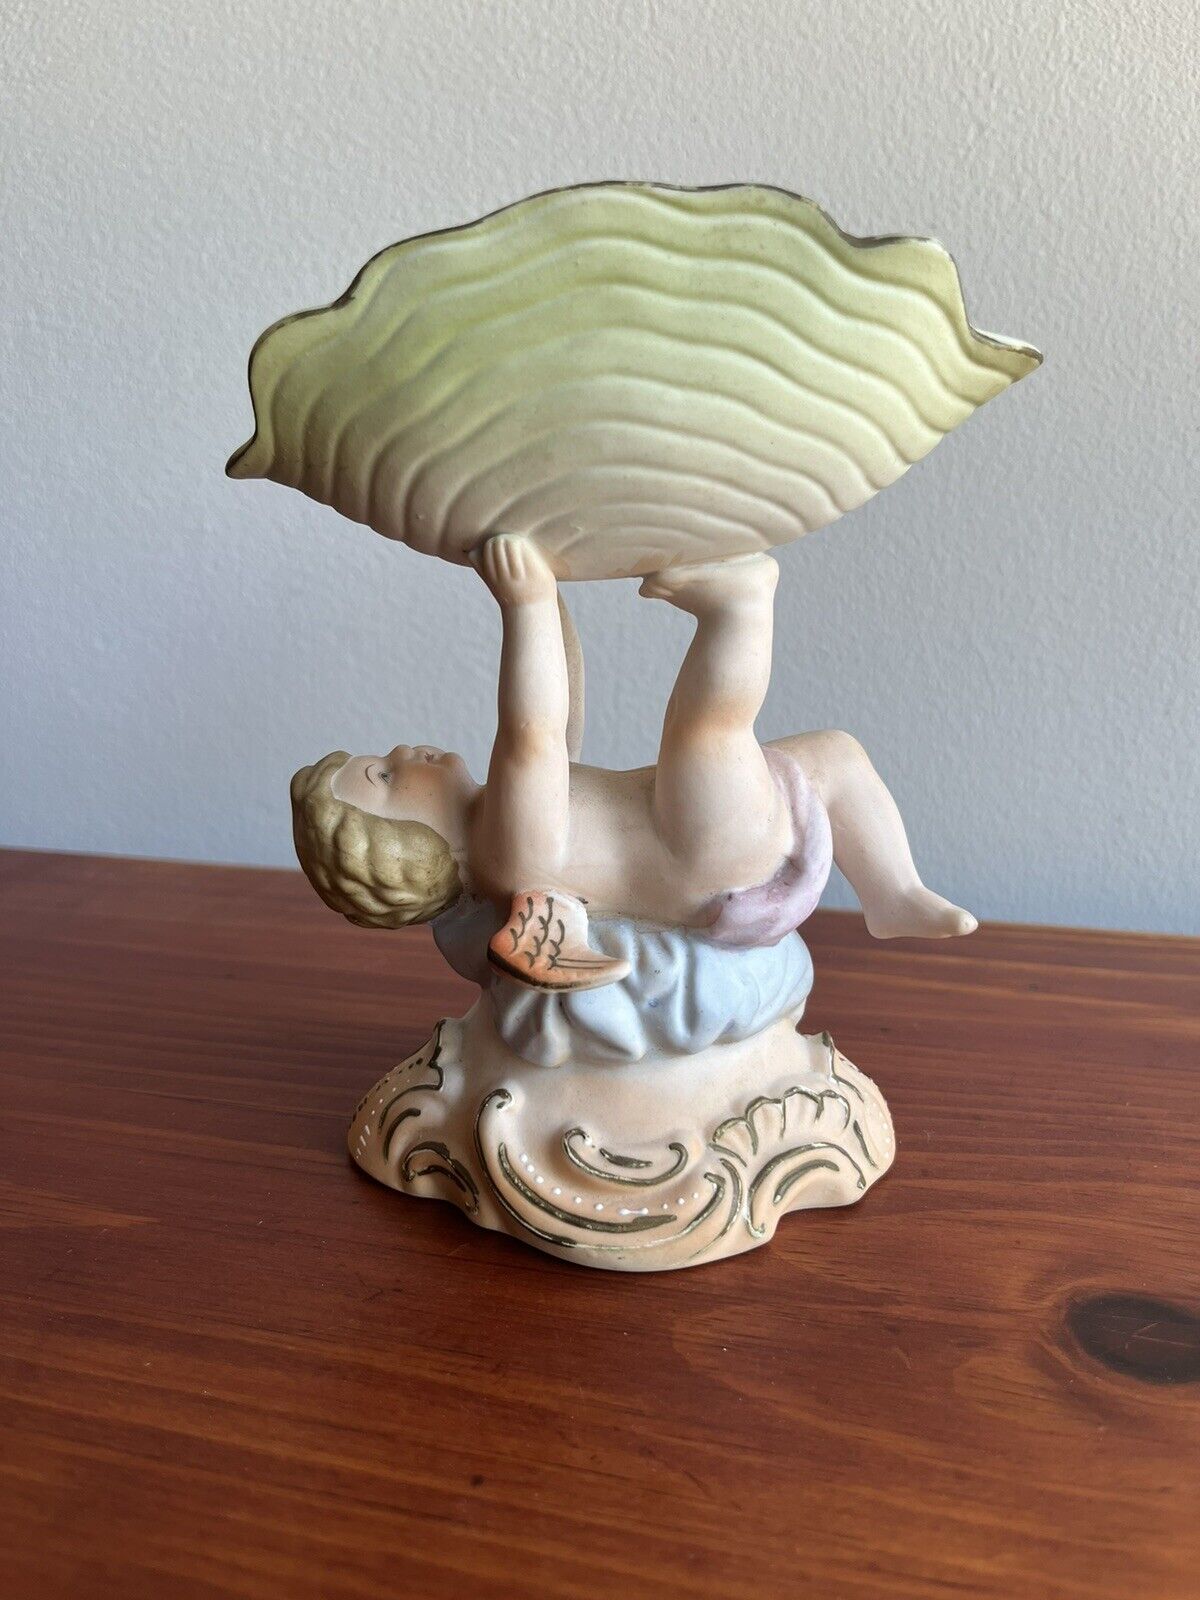 Vintage ARDALT Porcelain Cherub Figurine With Clam Dish#6175 Made In Japan